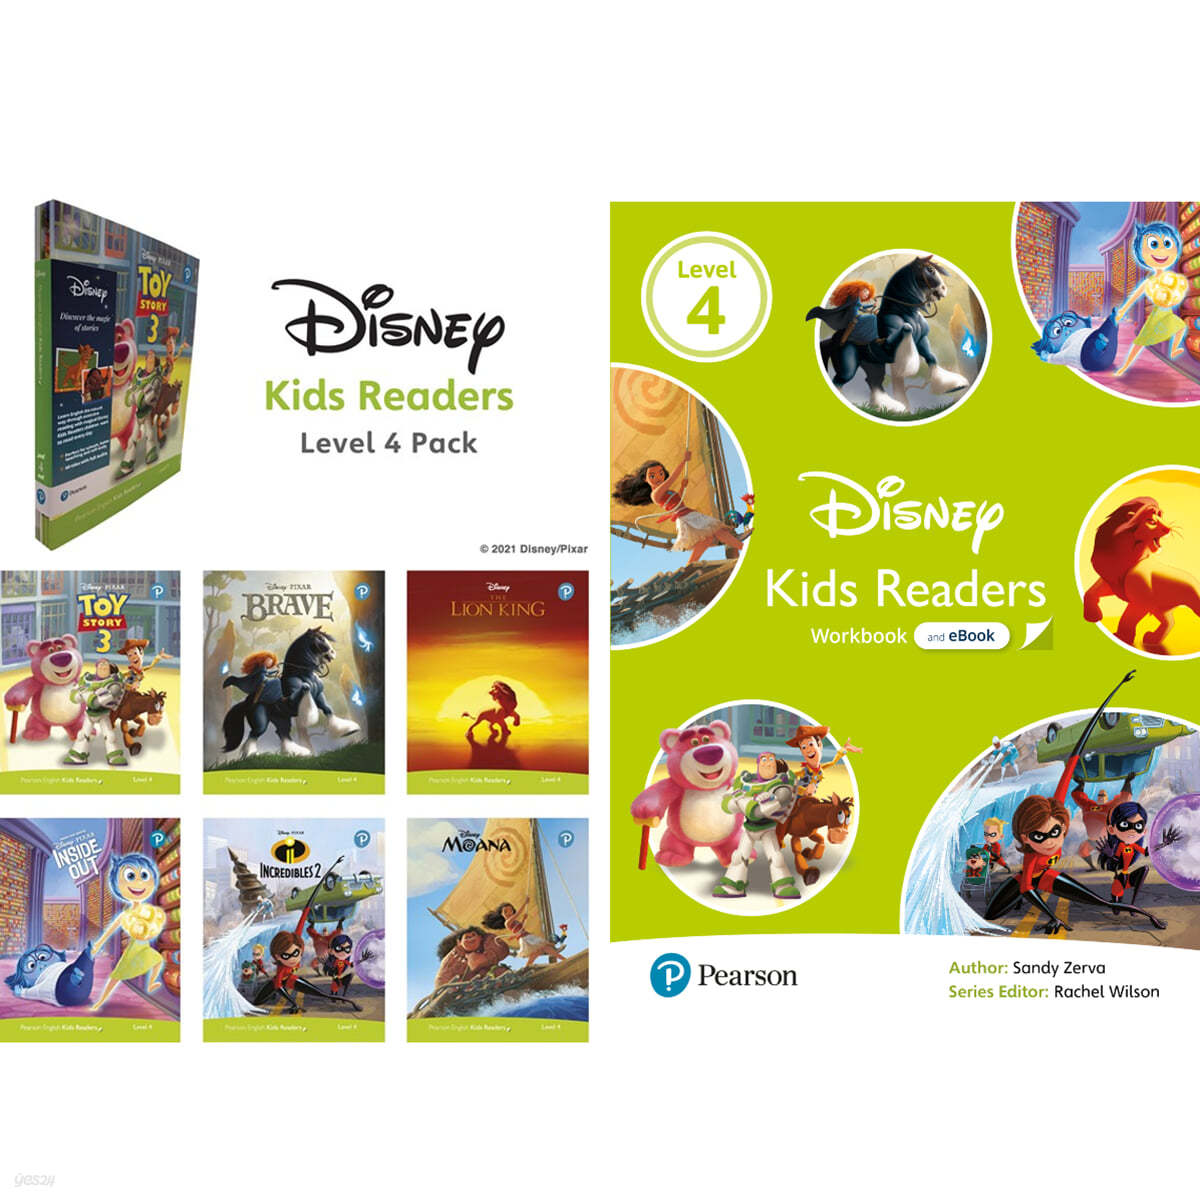 Disney Kids Readers Level 4 세트 (Pack + Workbook)